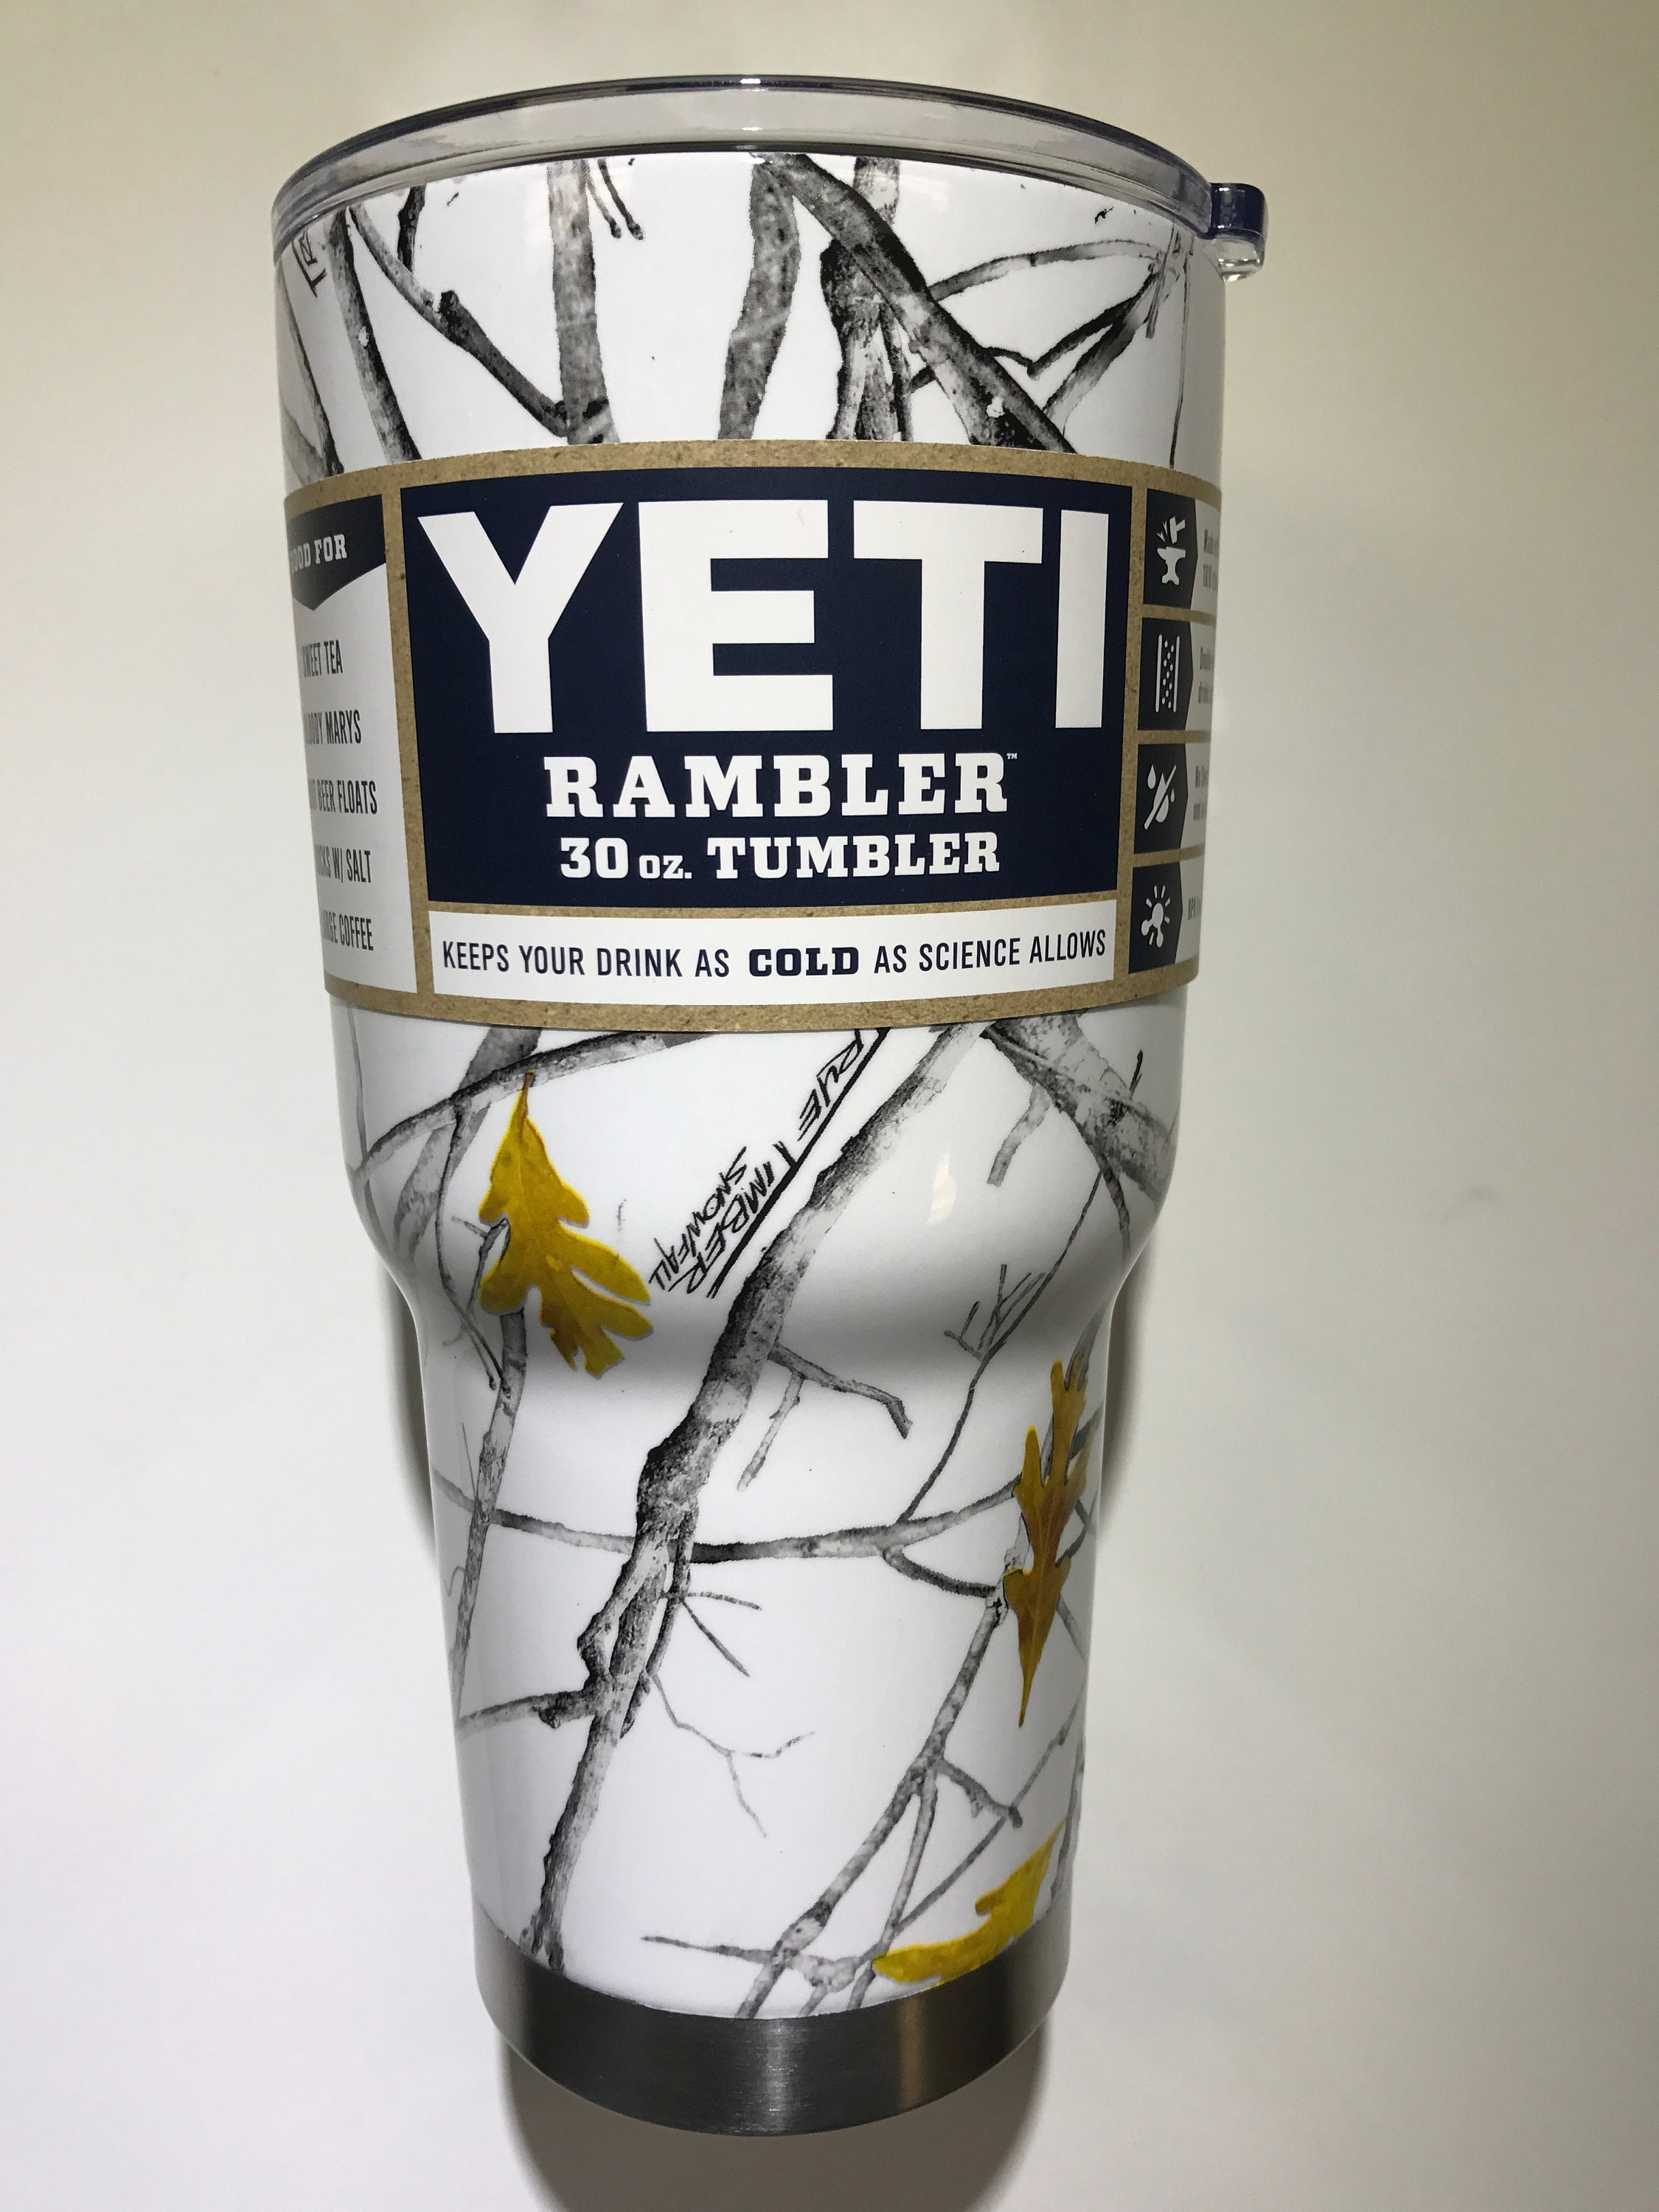 Wku | Western Kentucky Yeti 30oz Rambler | Alumni Hall